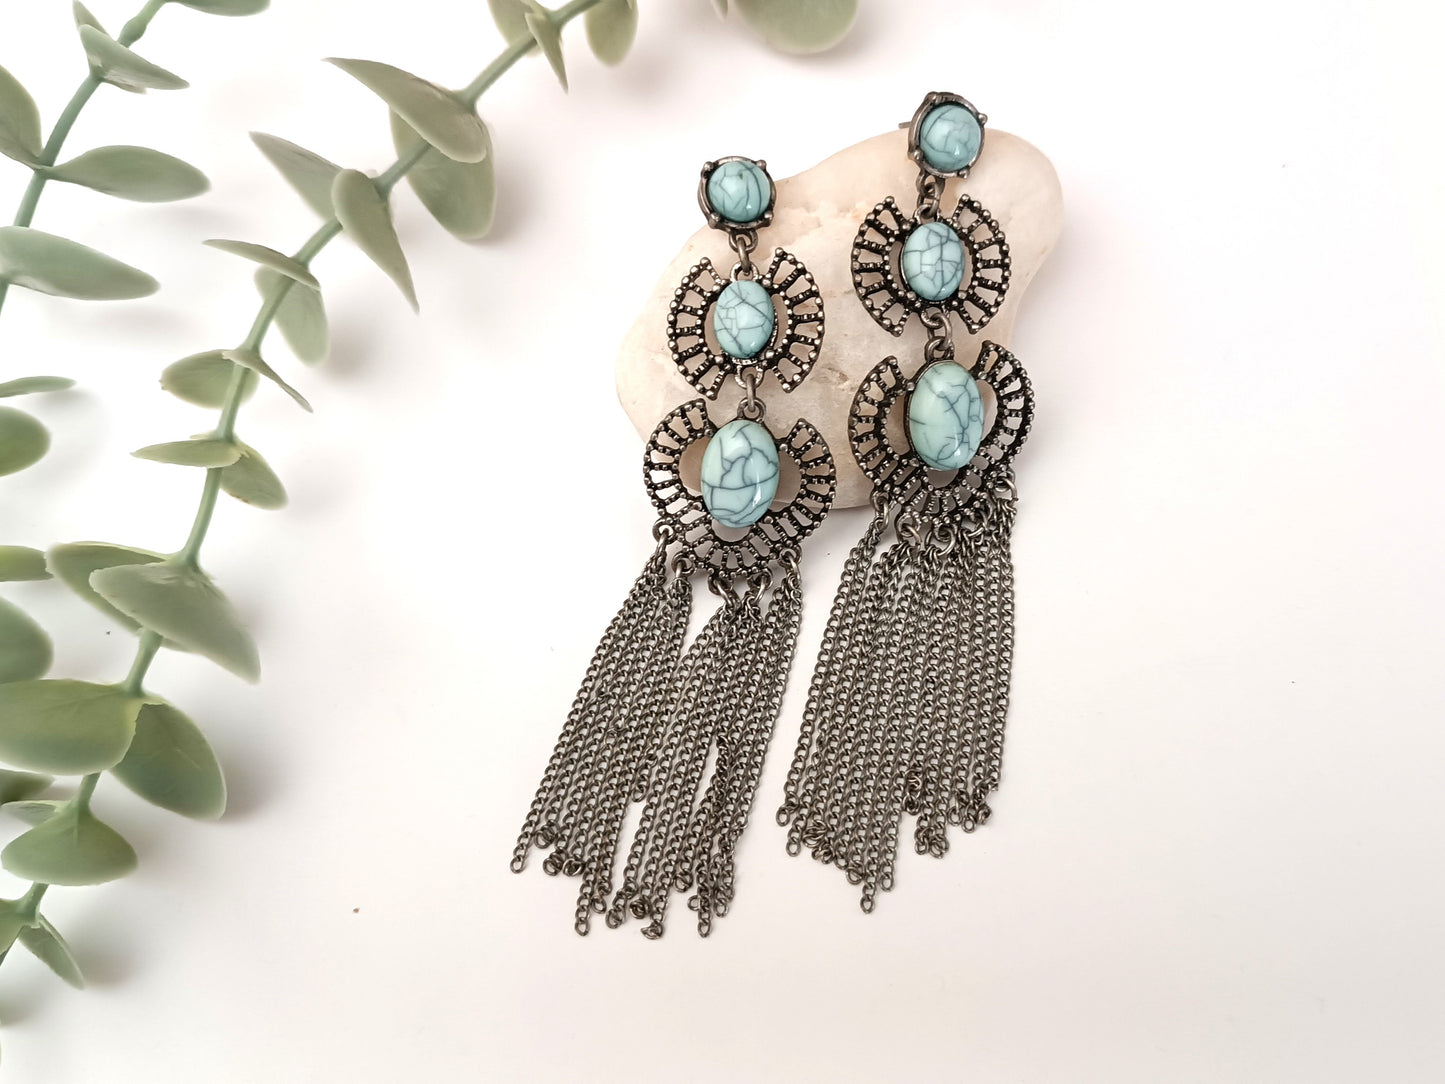 Boho earrings with turquoise